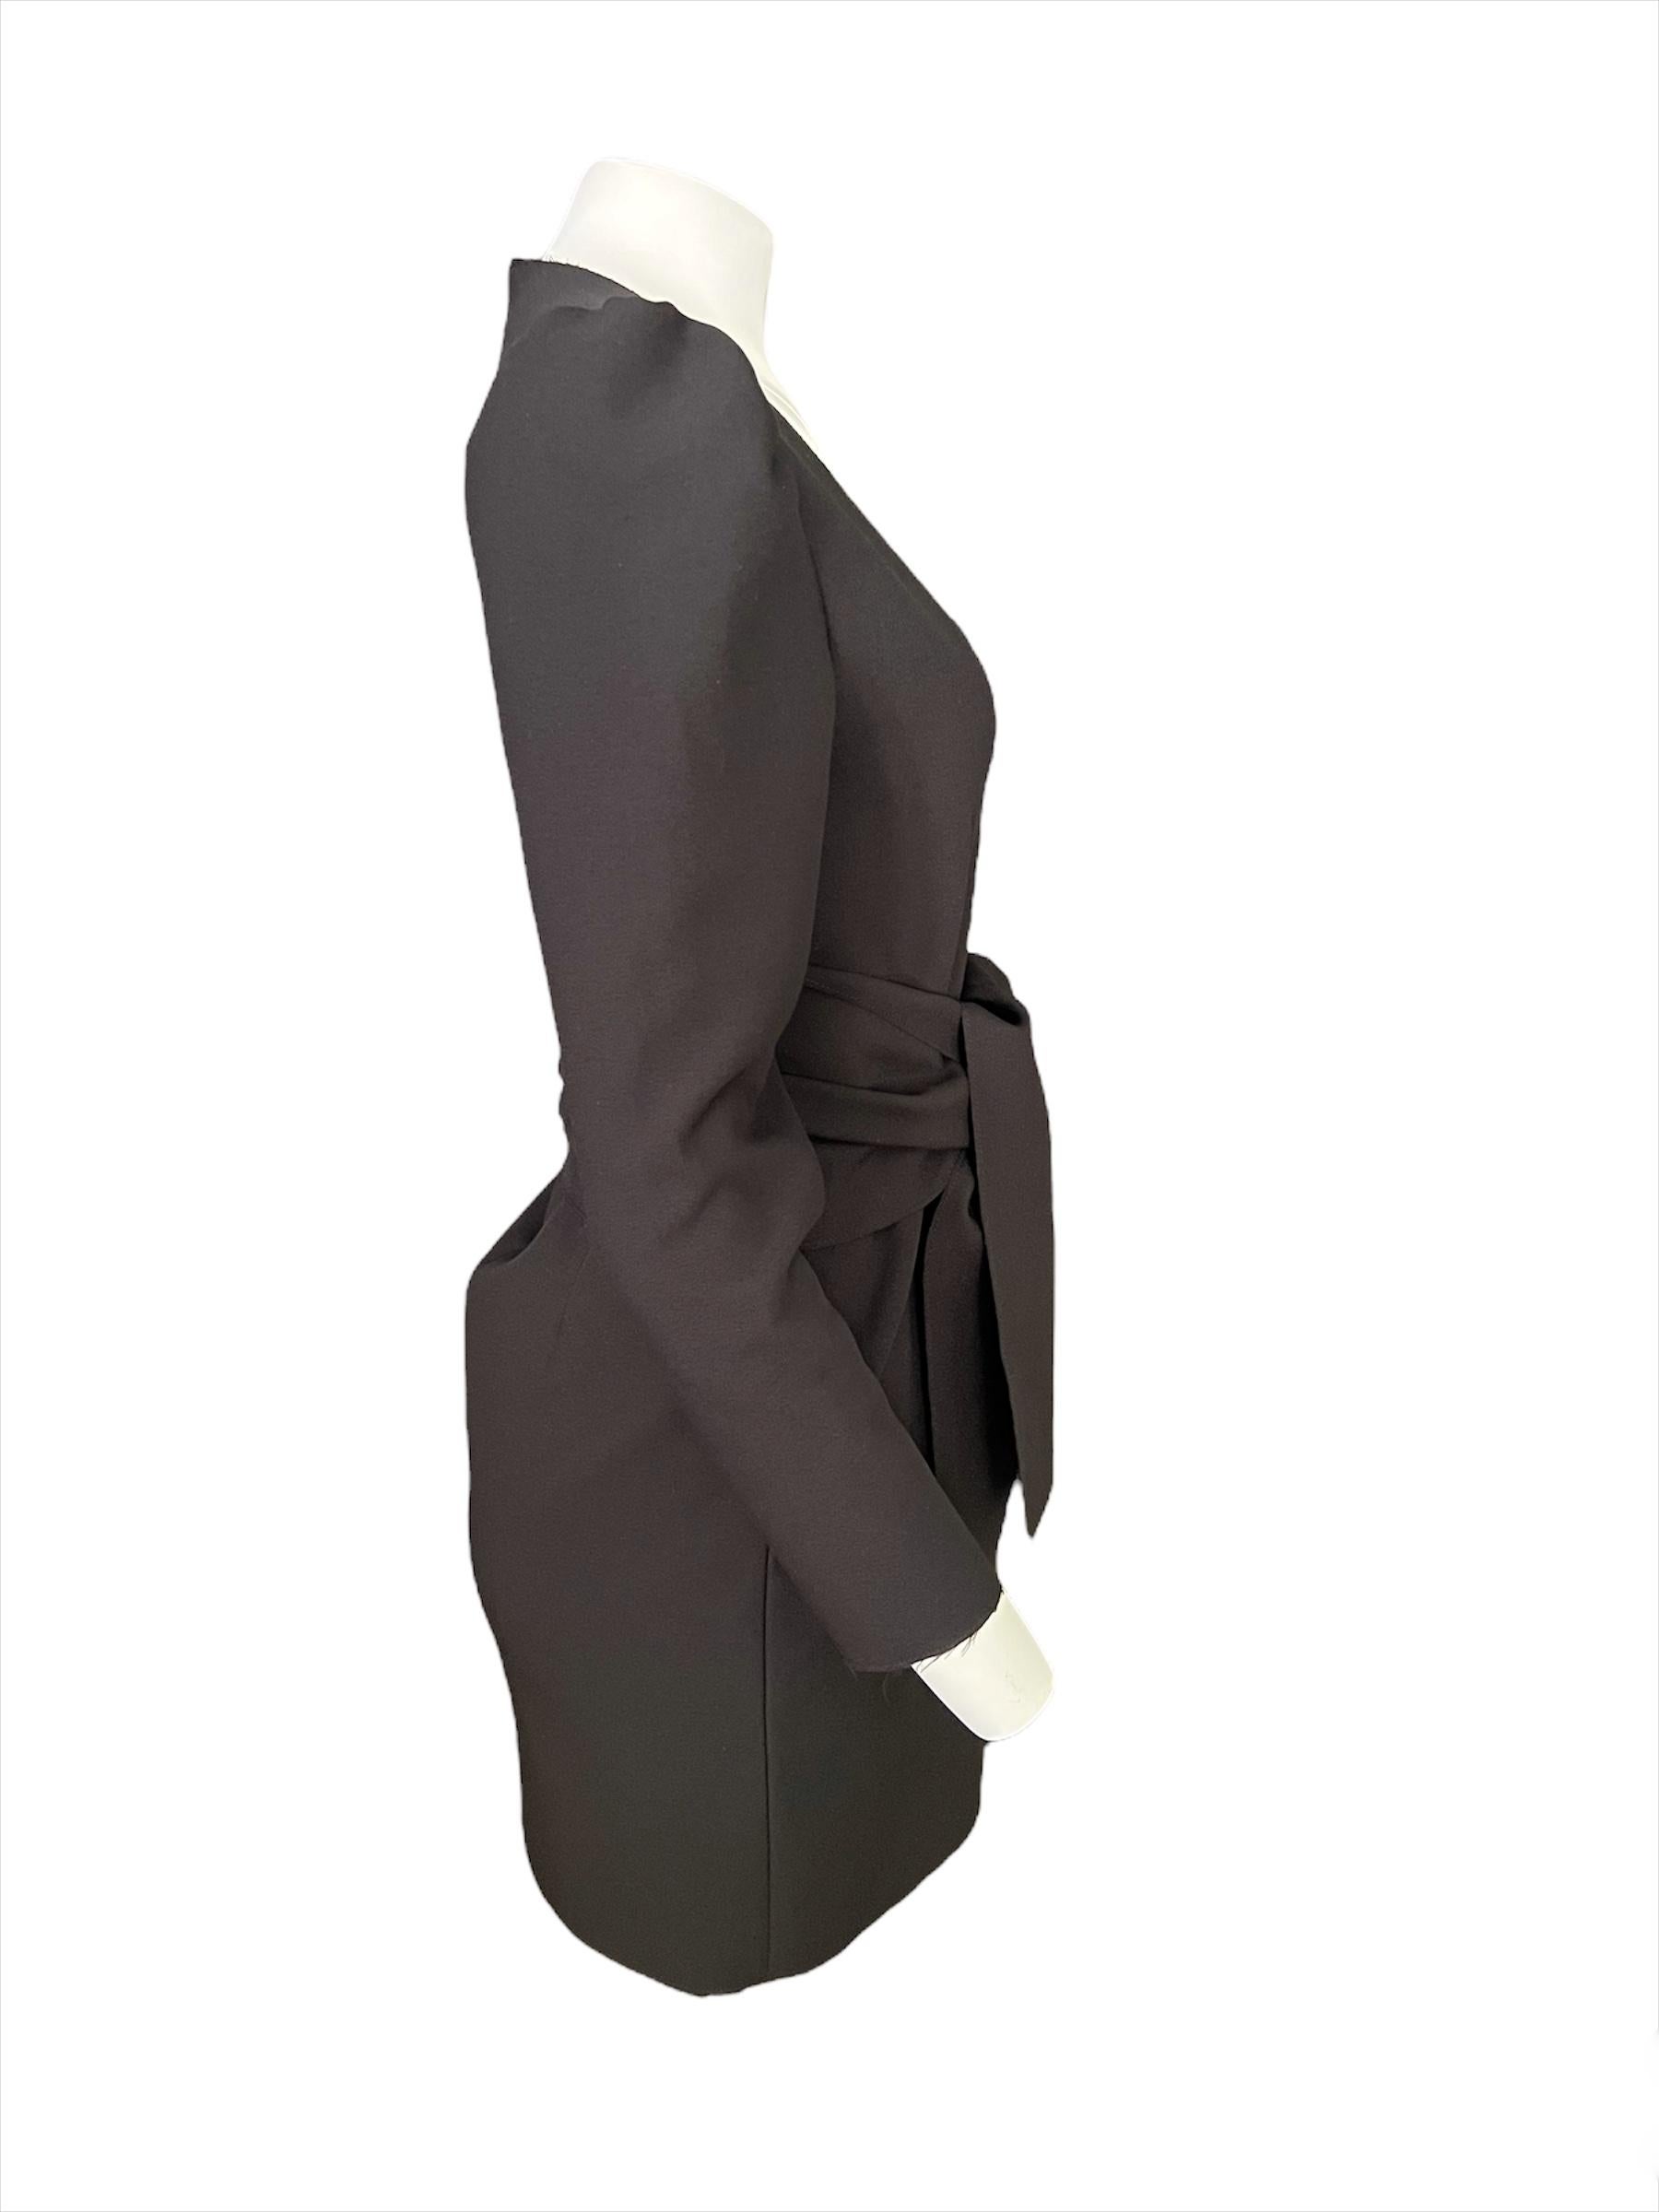 - Long balloon sleeves
- Deep V neckline
- Mini length
- Belted design detail
- Rear concealed zip closure